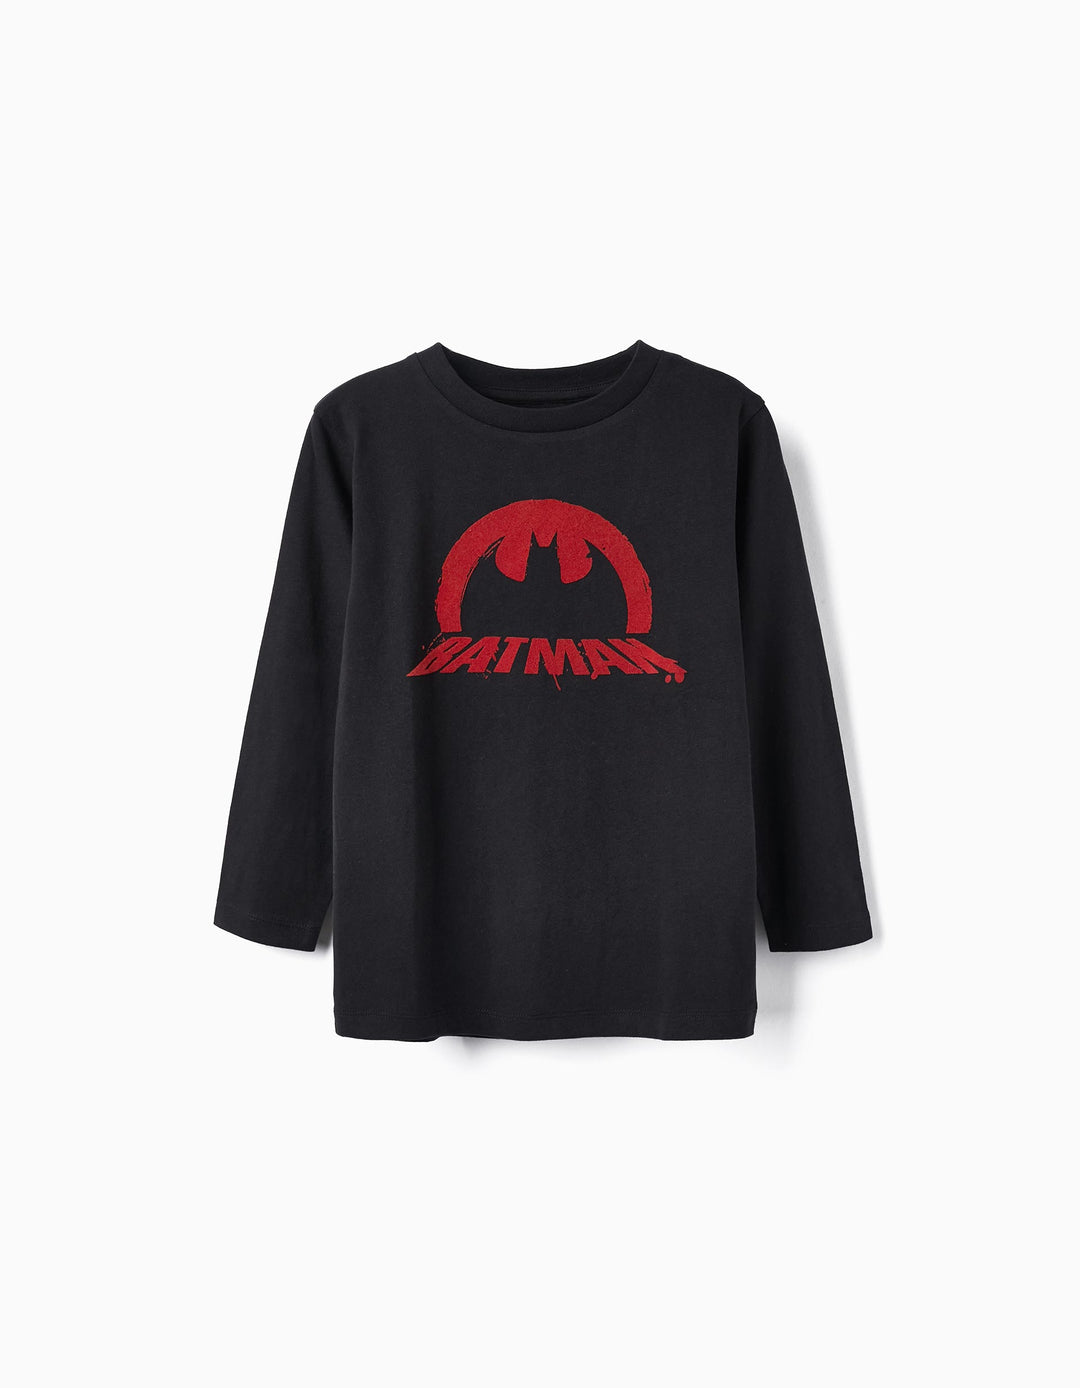 Long Sleeve Cotton T-shirt for Boys 'Batman', Black